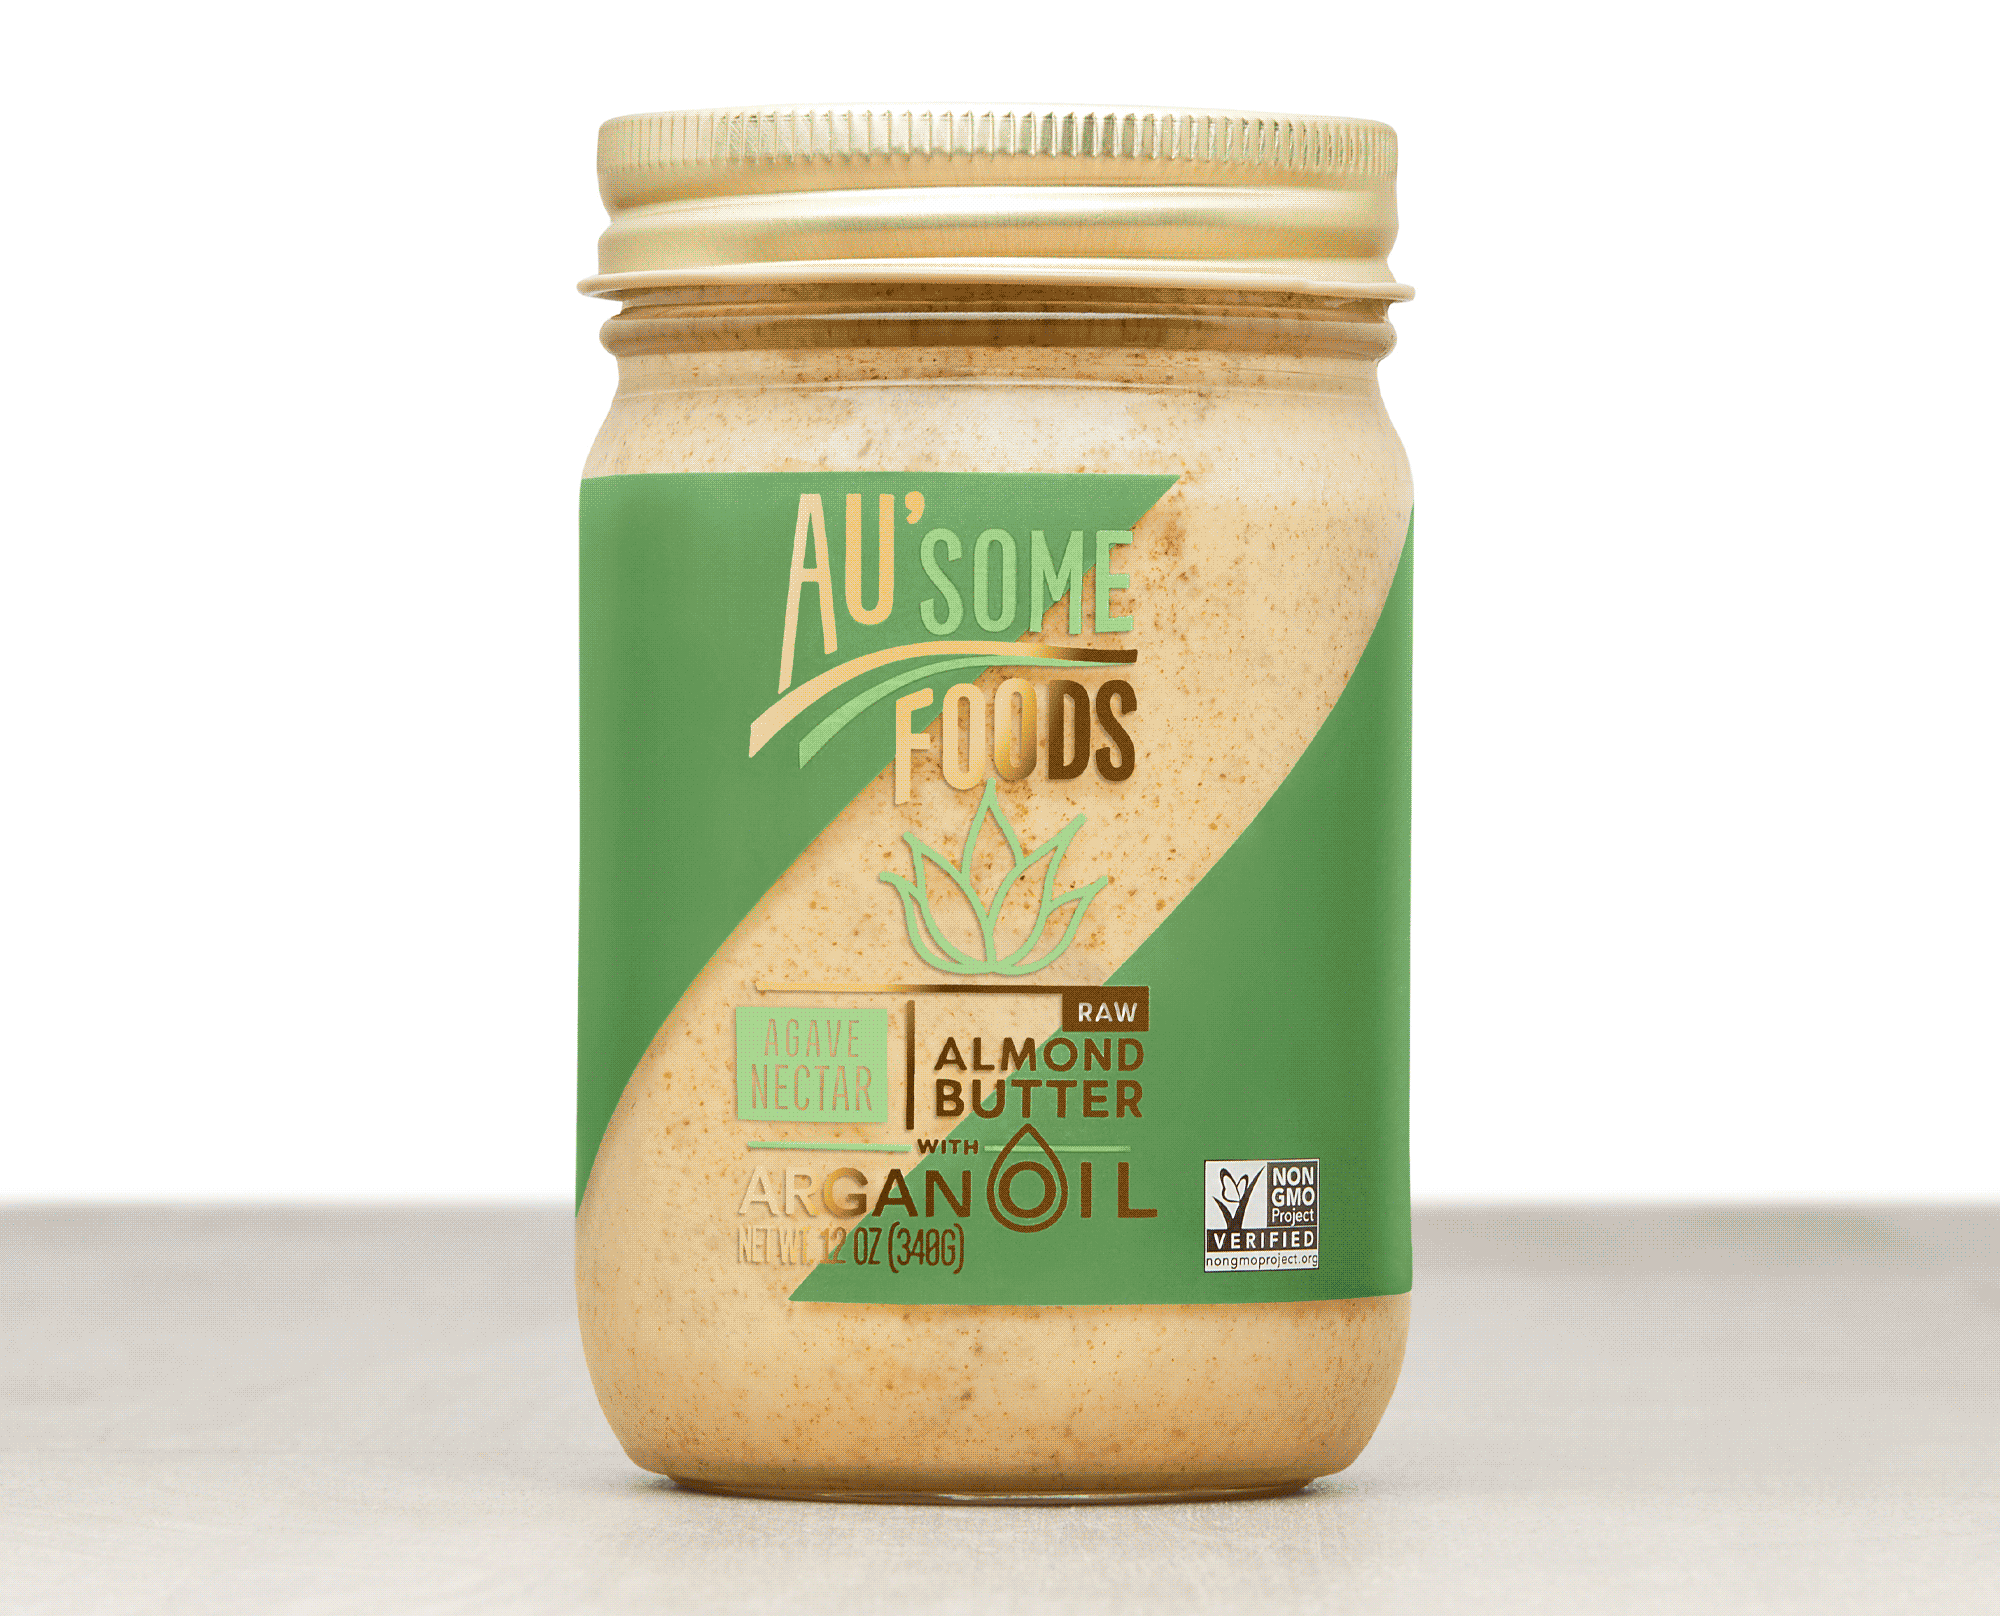 Ausome foods almond butter packaging design featimg